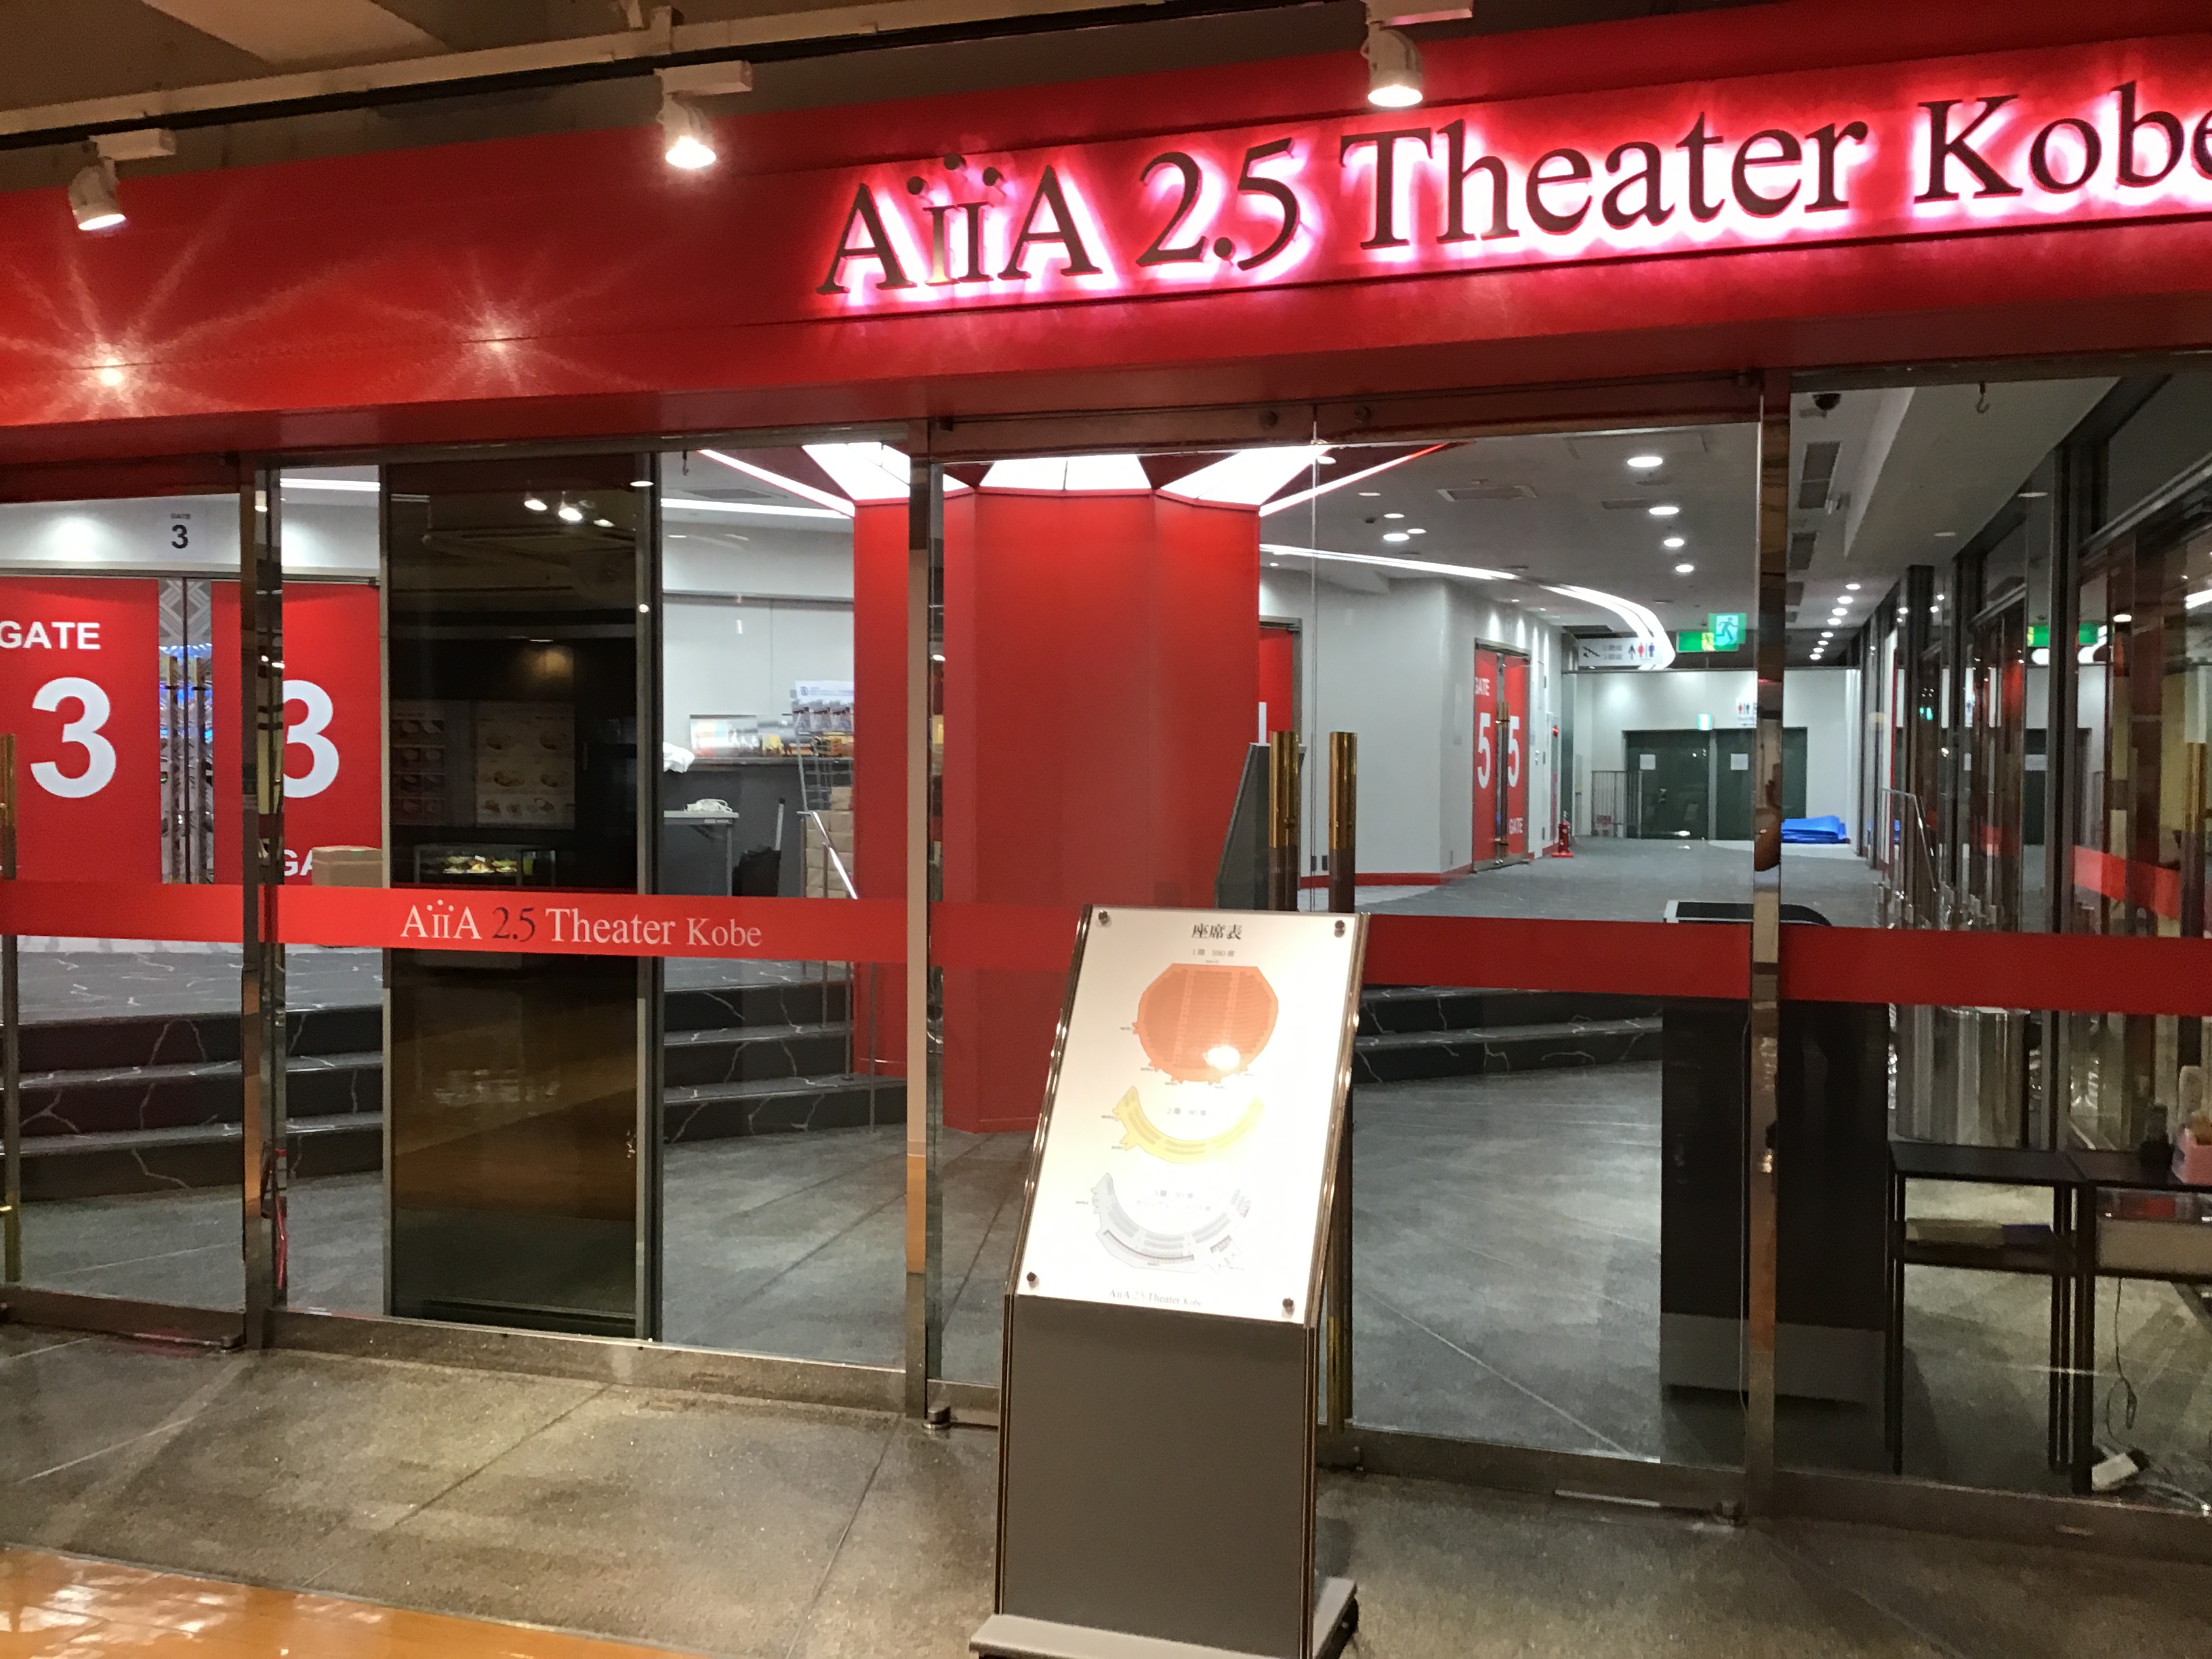 Aiia 2 5 Theater Kobe 神戸市立灘区民ホール